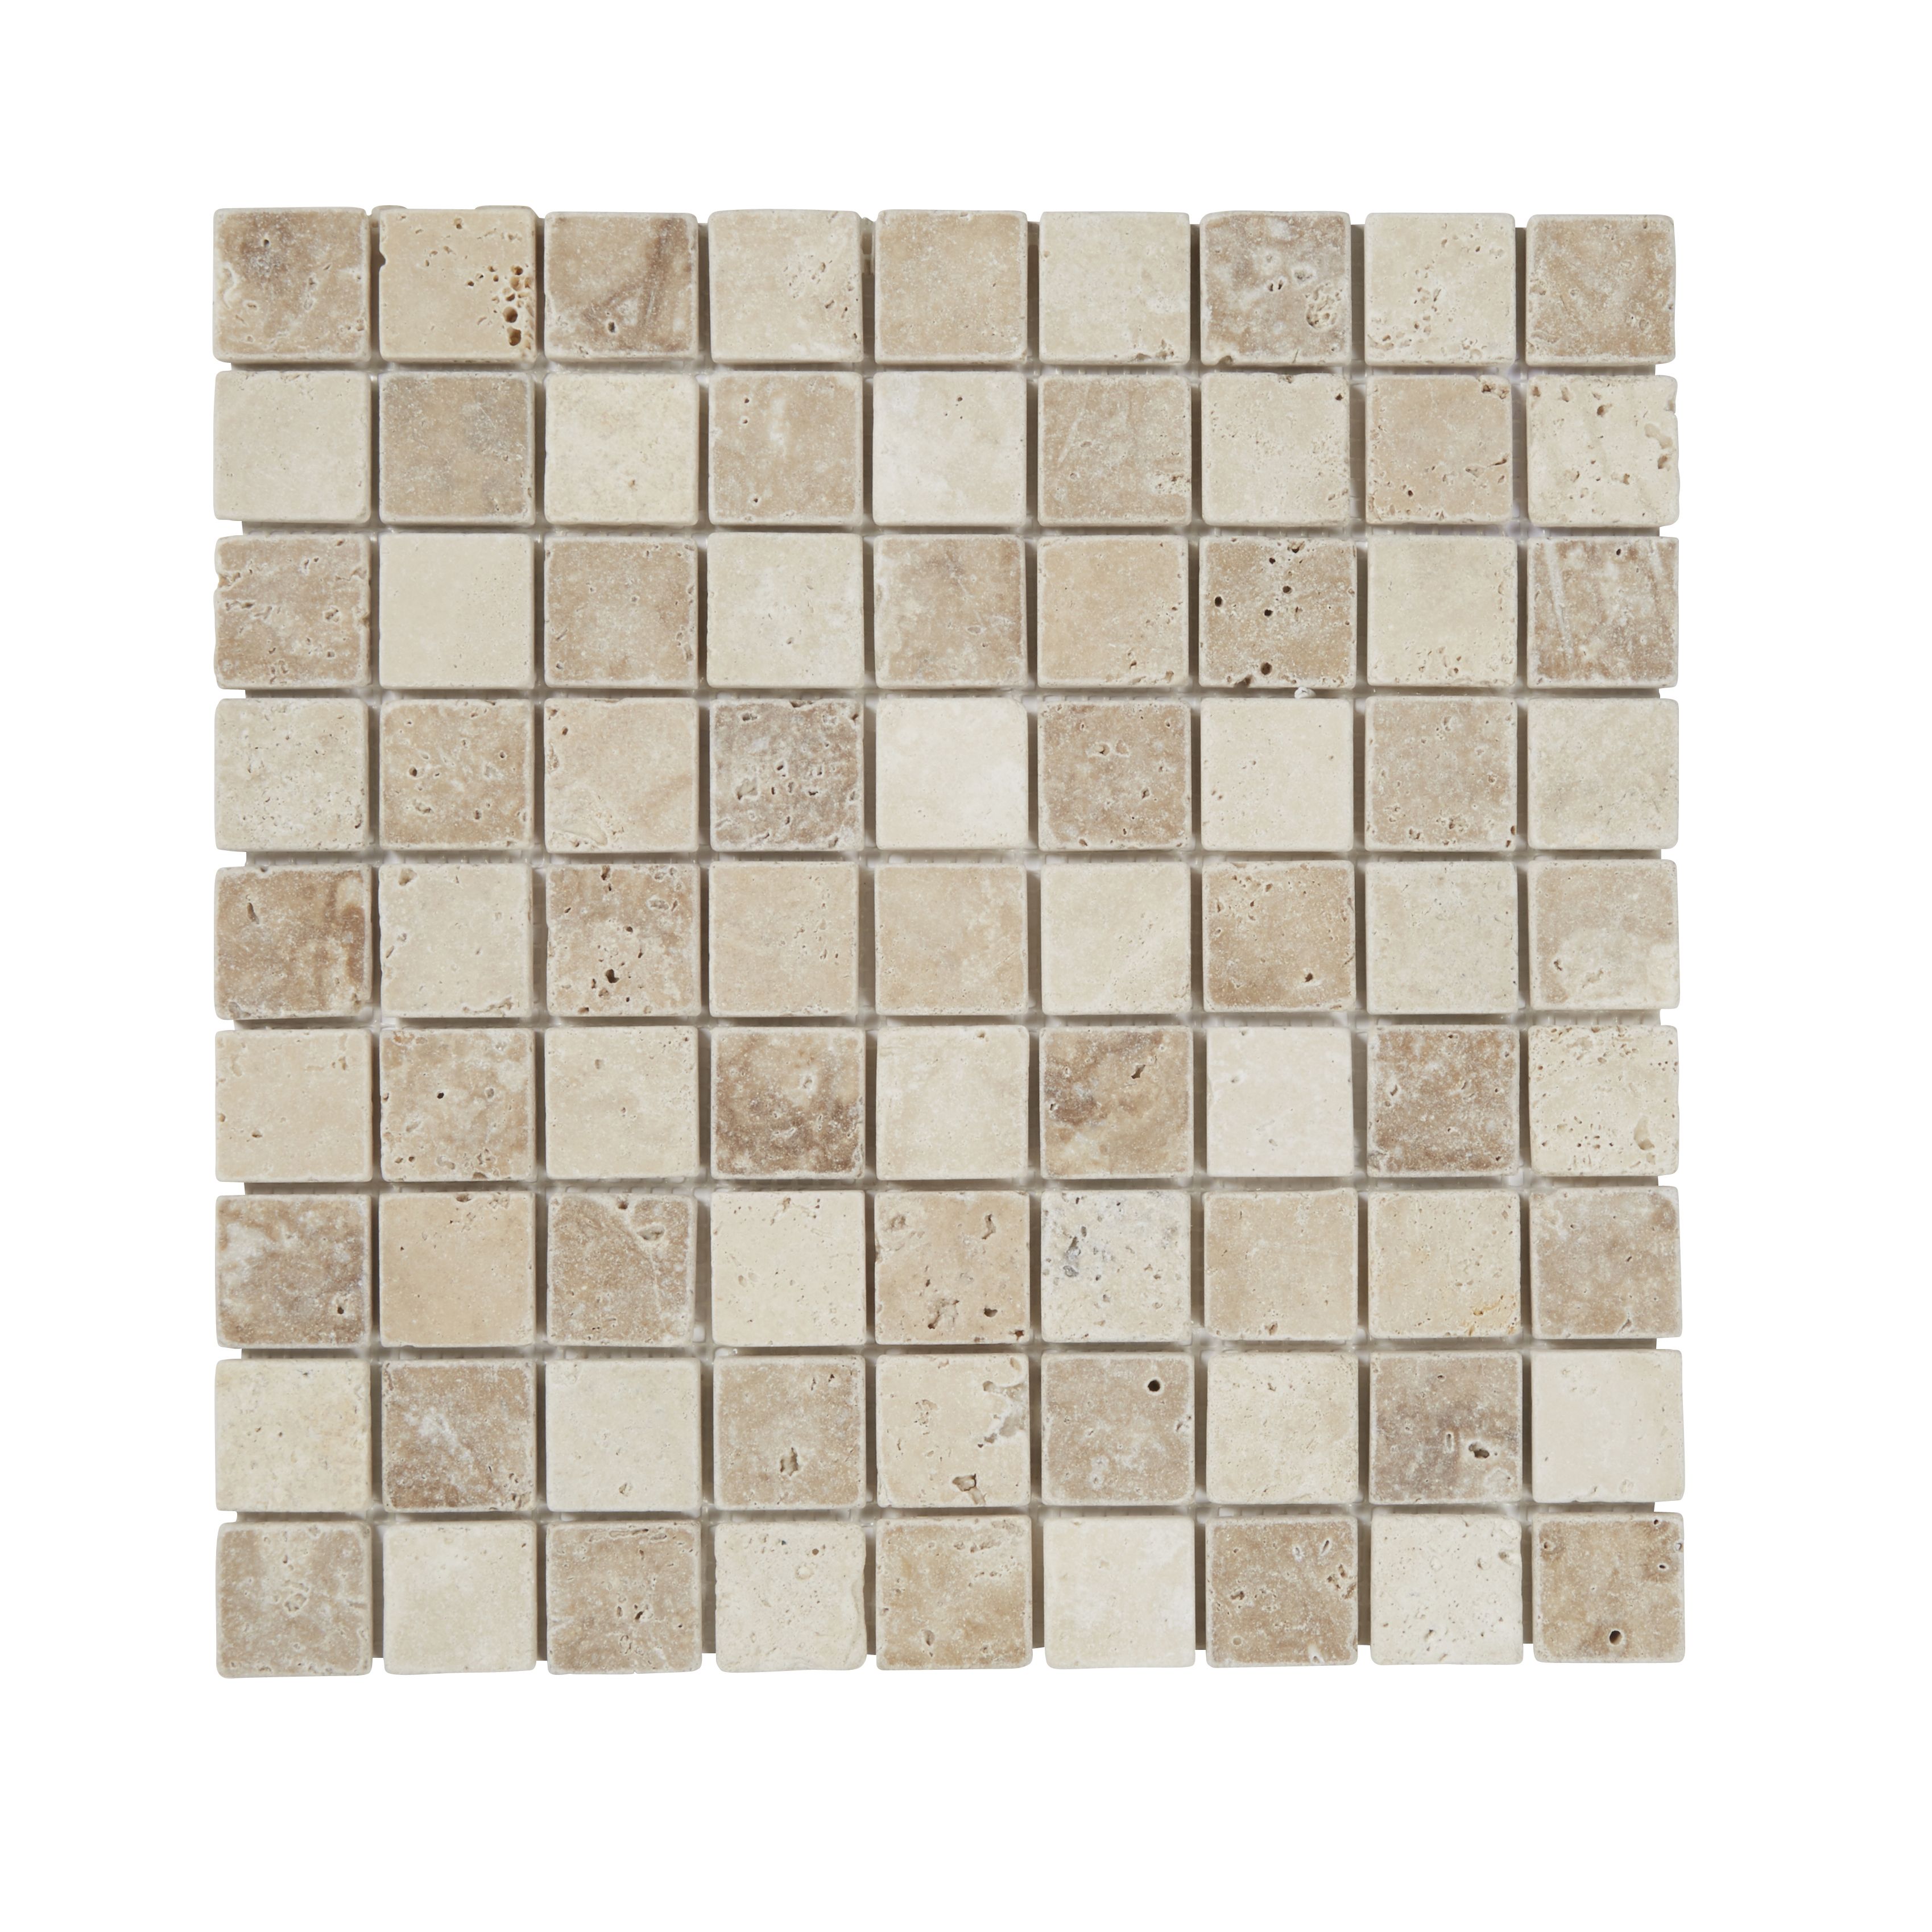 Real tumbled travertine Beige Natural stone 3x3 Mosaic tile sheet, (L)305mm (W)305mm